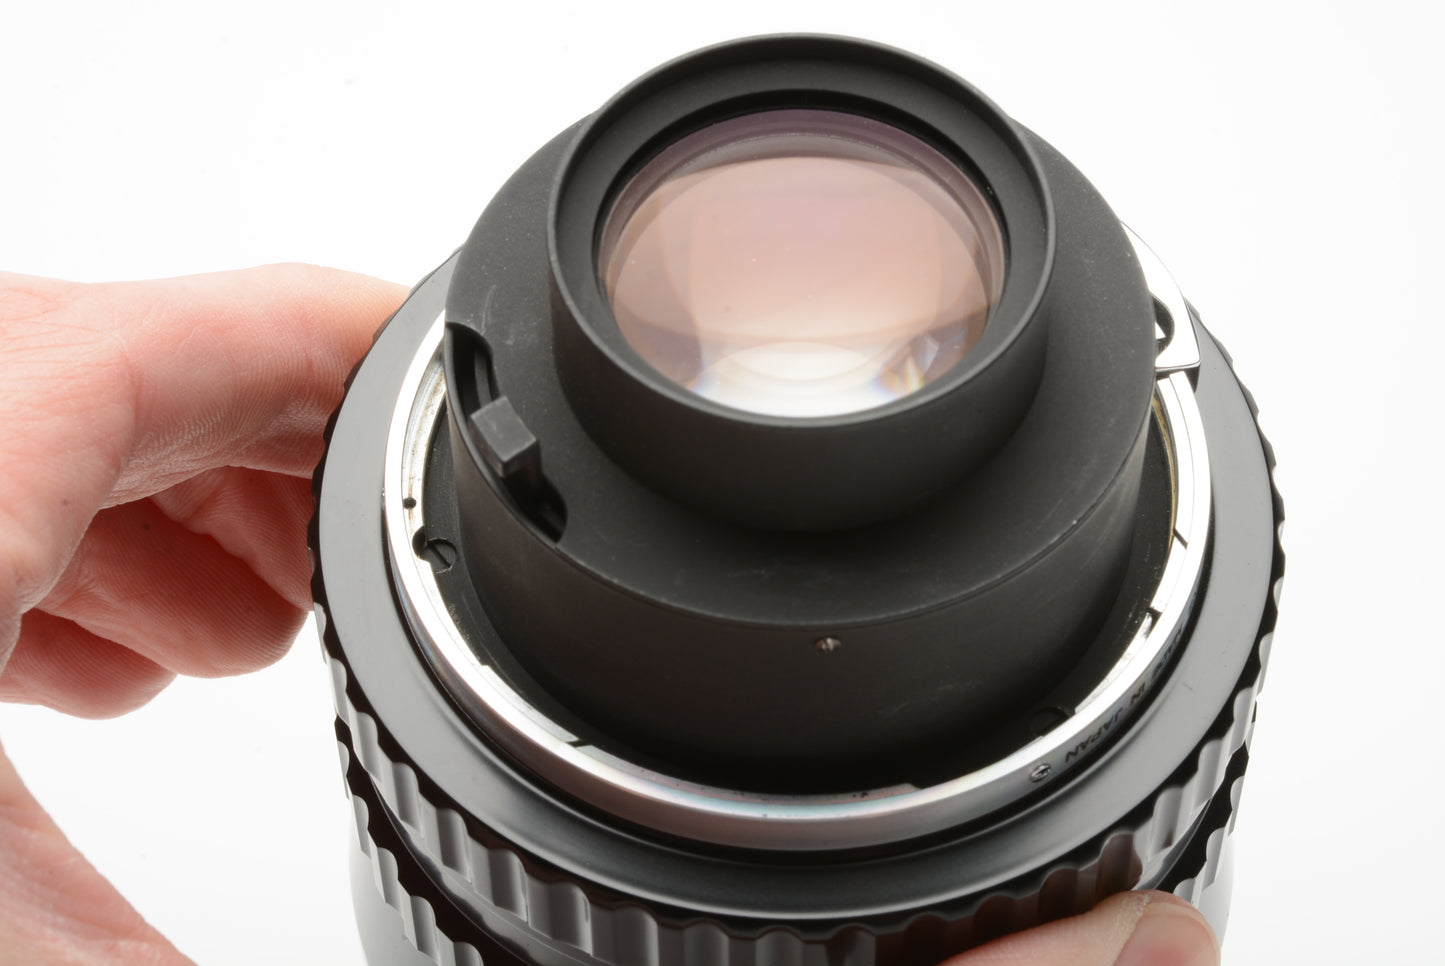 Nikkor-0 50mm f2.8 for Bronica S series cameras, Cap+Pola filter